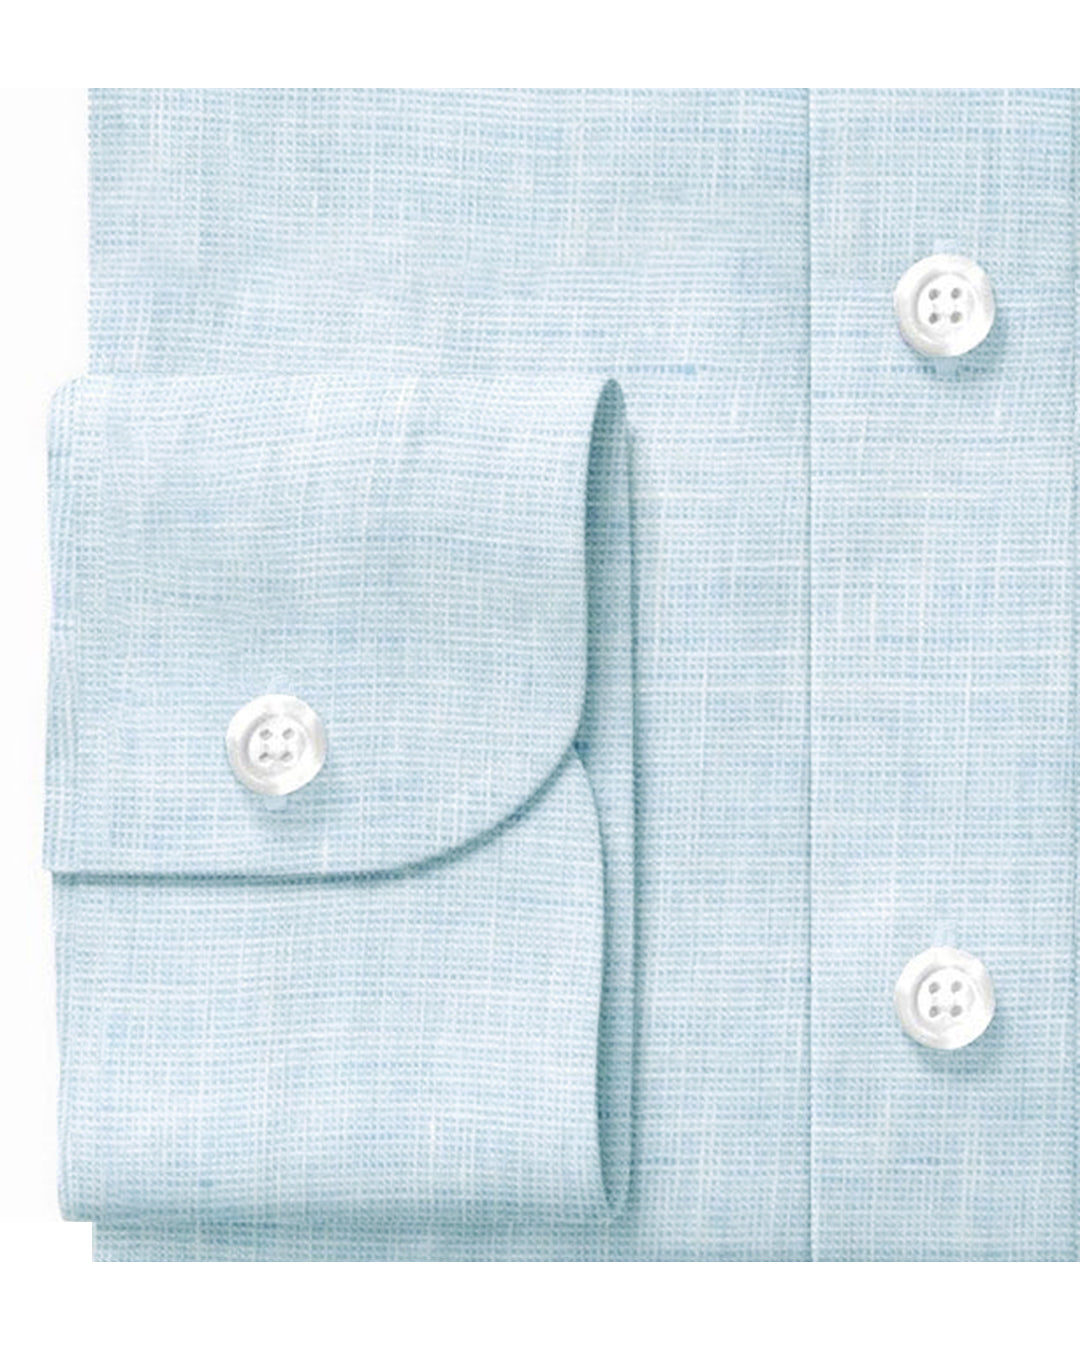 Cuff of custom linen shirt for men in pale blue